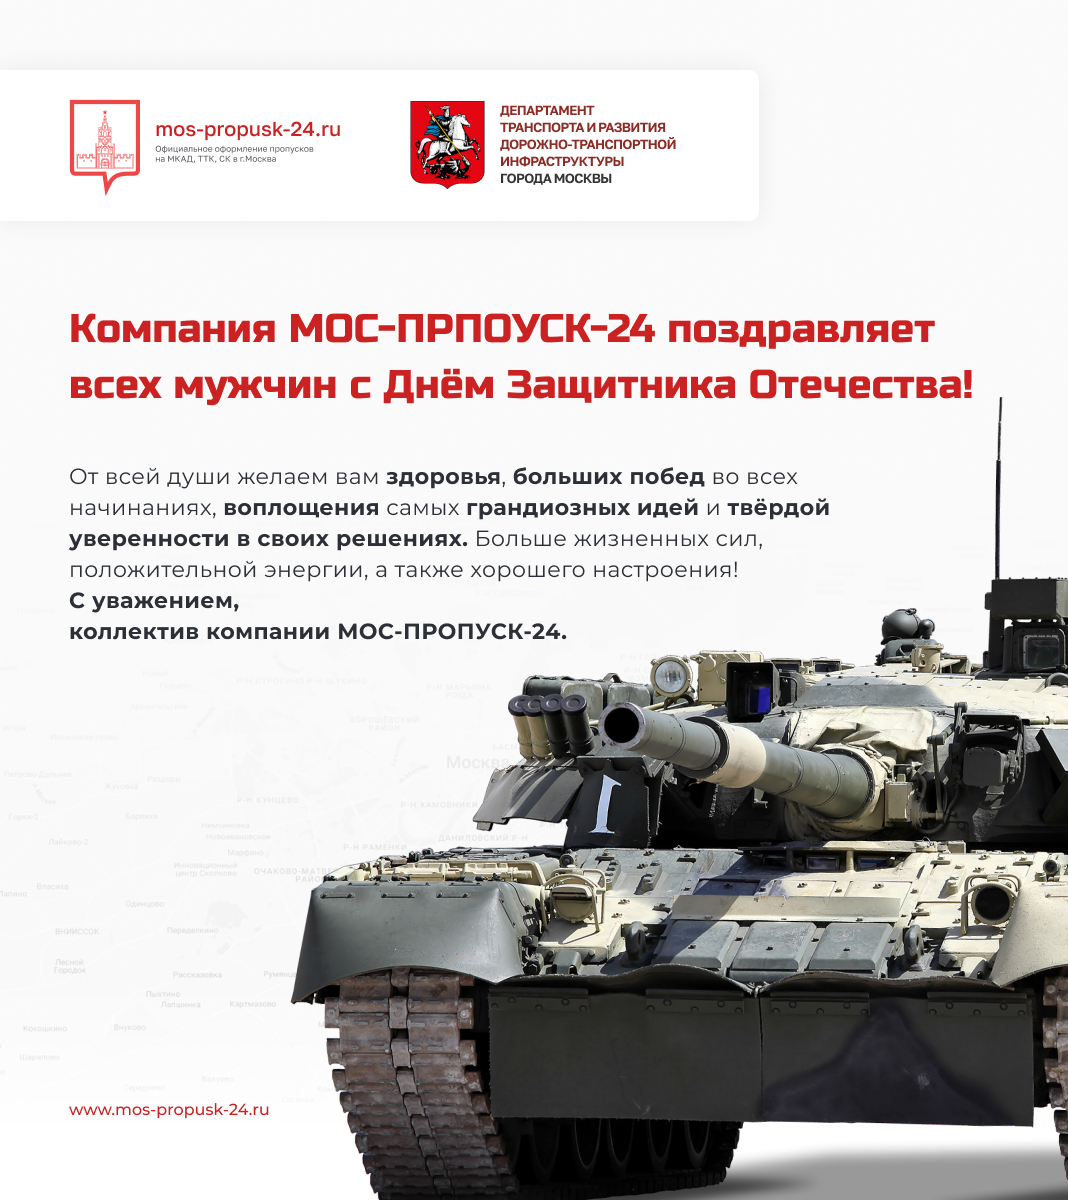 Компания МОС-ПРОПУСК-24 поздравляет всех мужчин с Днём защитника Отечества!